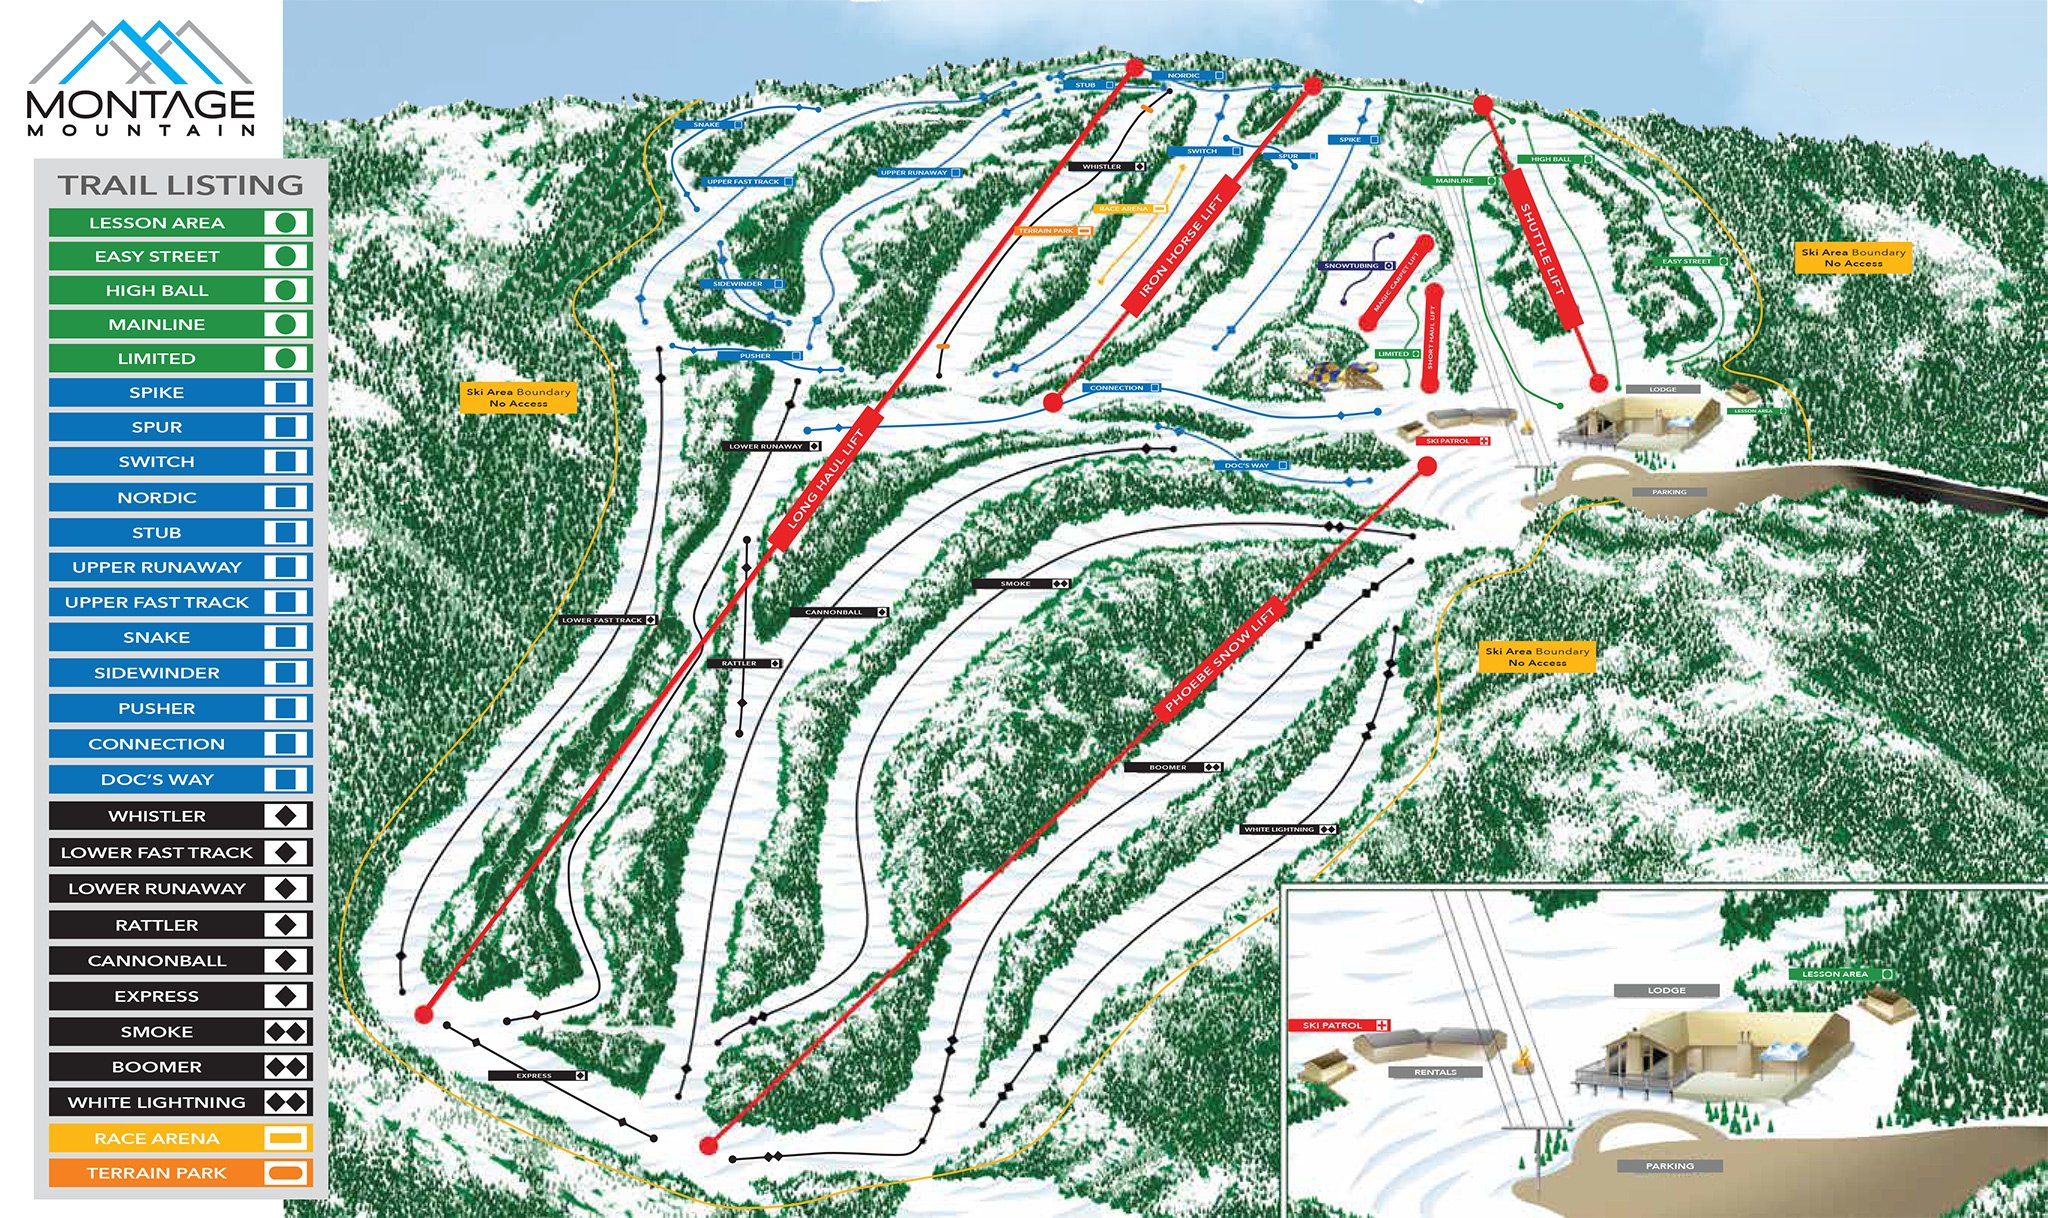 Pocono Ski Resort Montage Mountain Trail Map PA Ski Resort Skiing Snowboard...